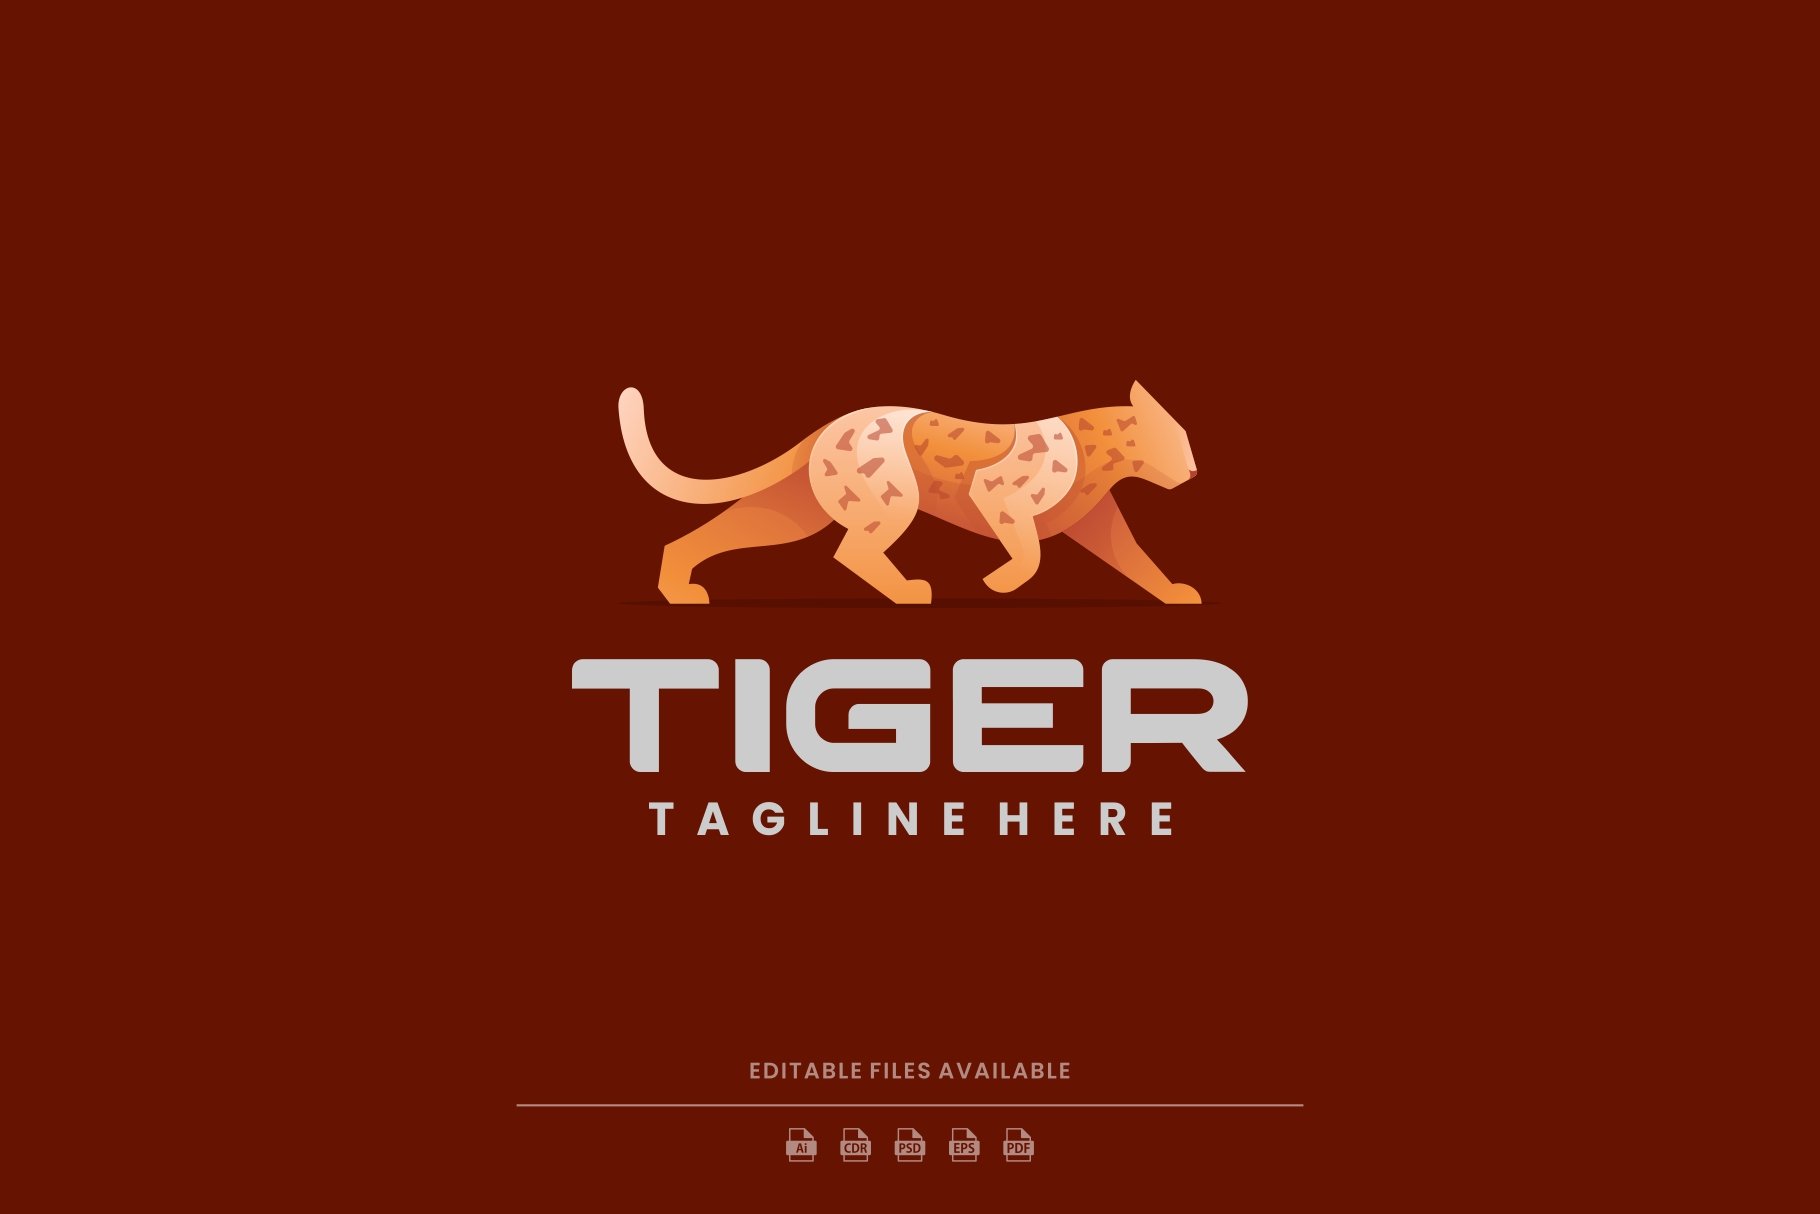 Tiger Gradient Logo cover image.